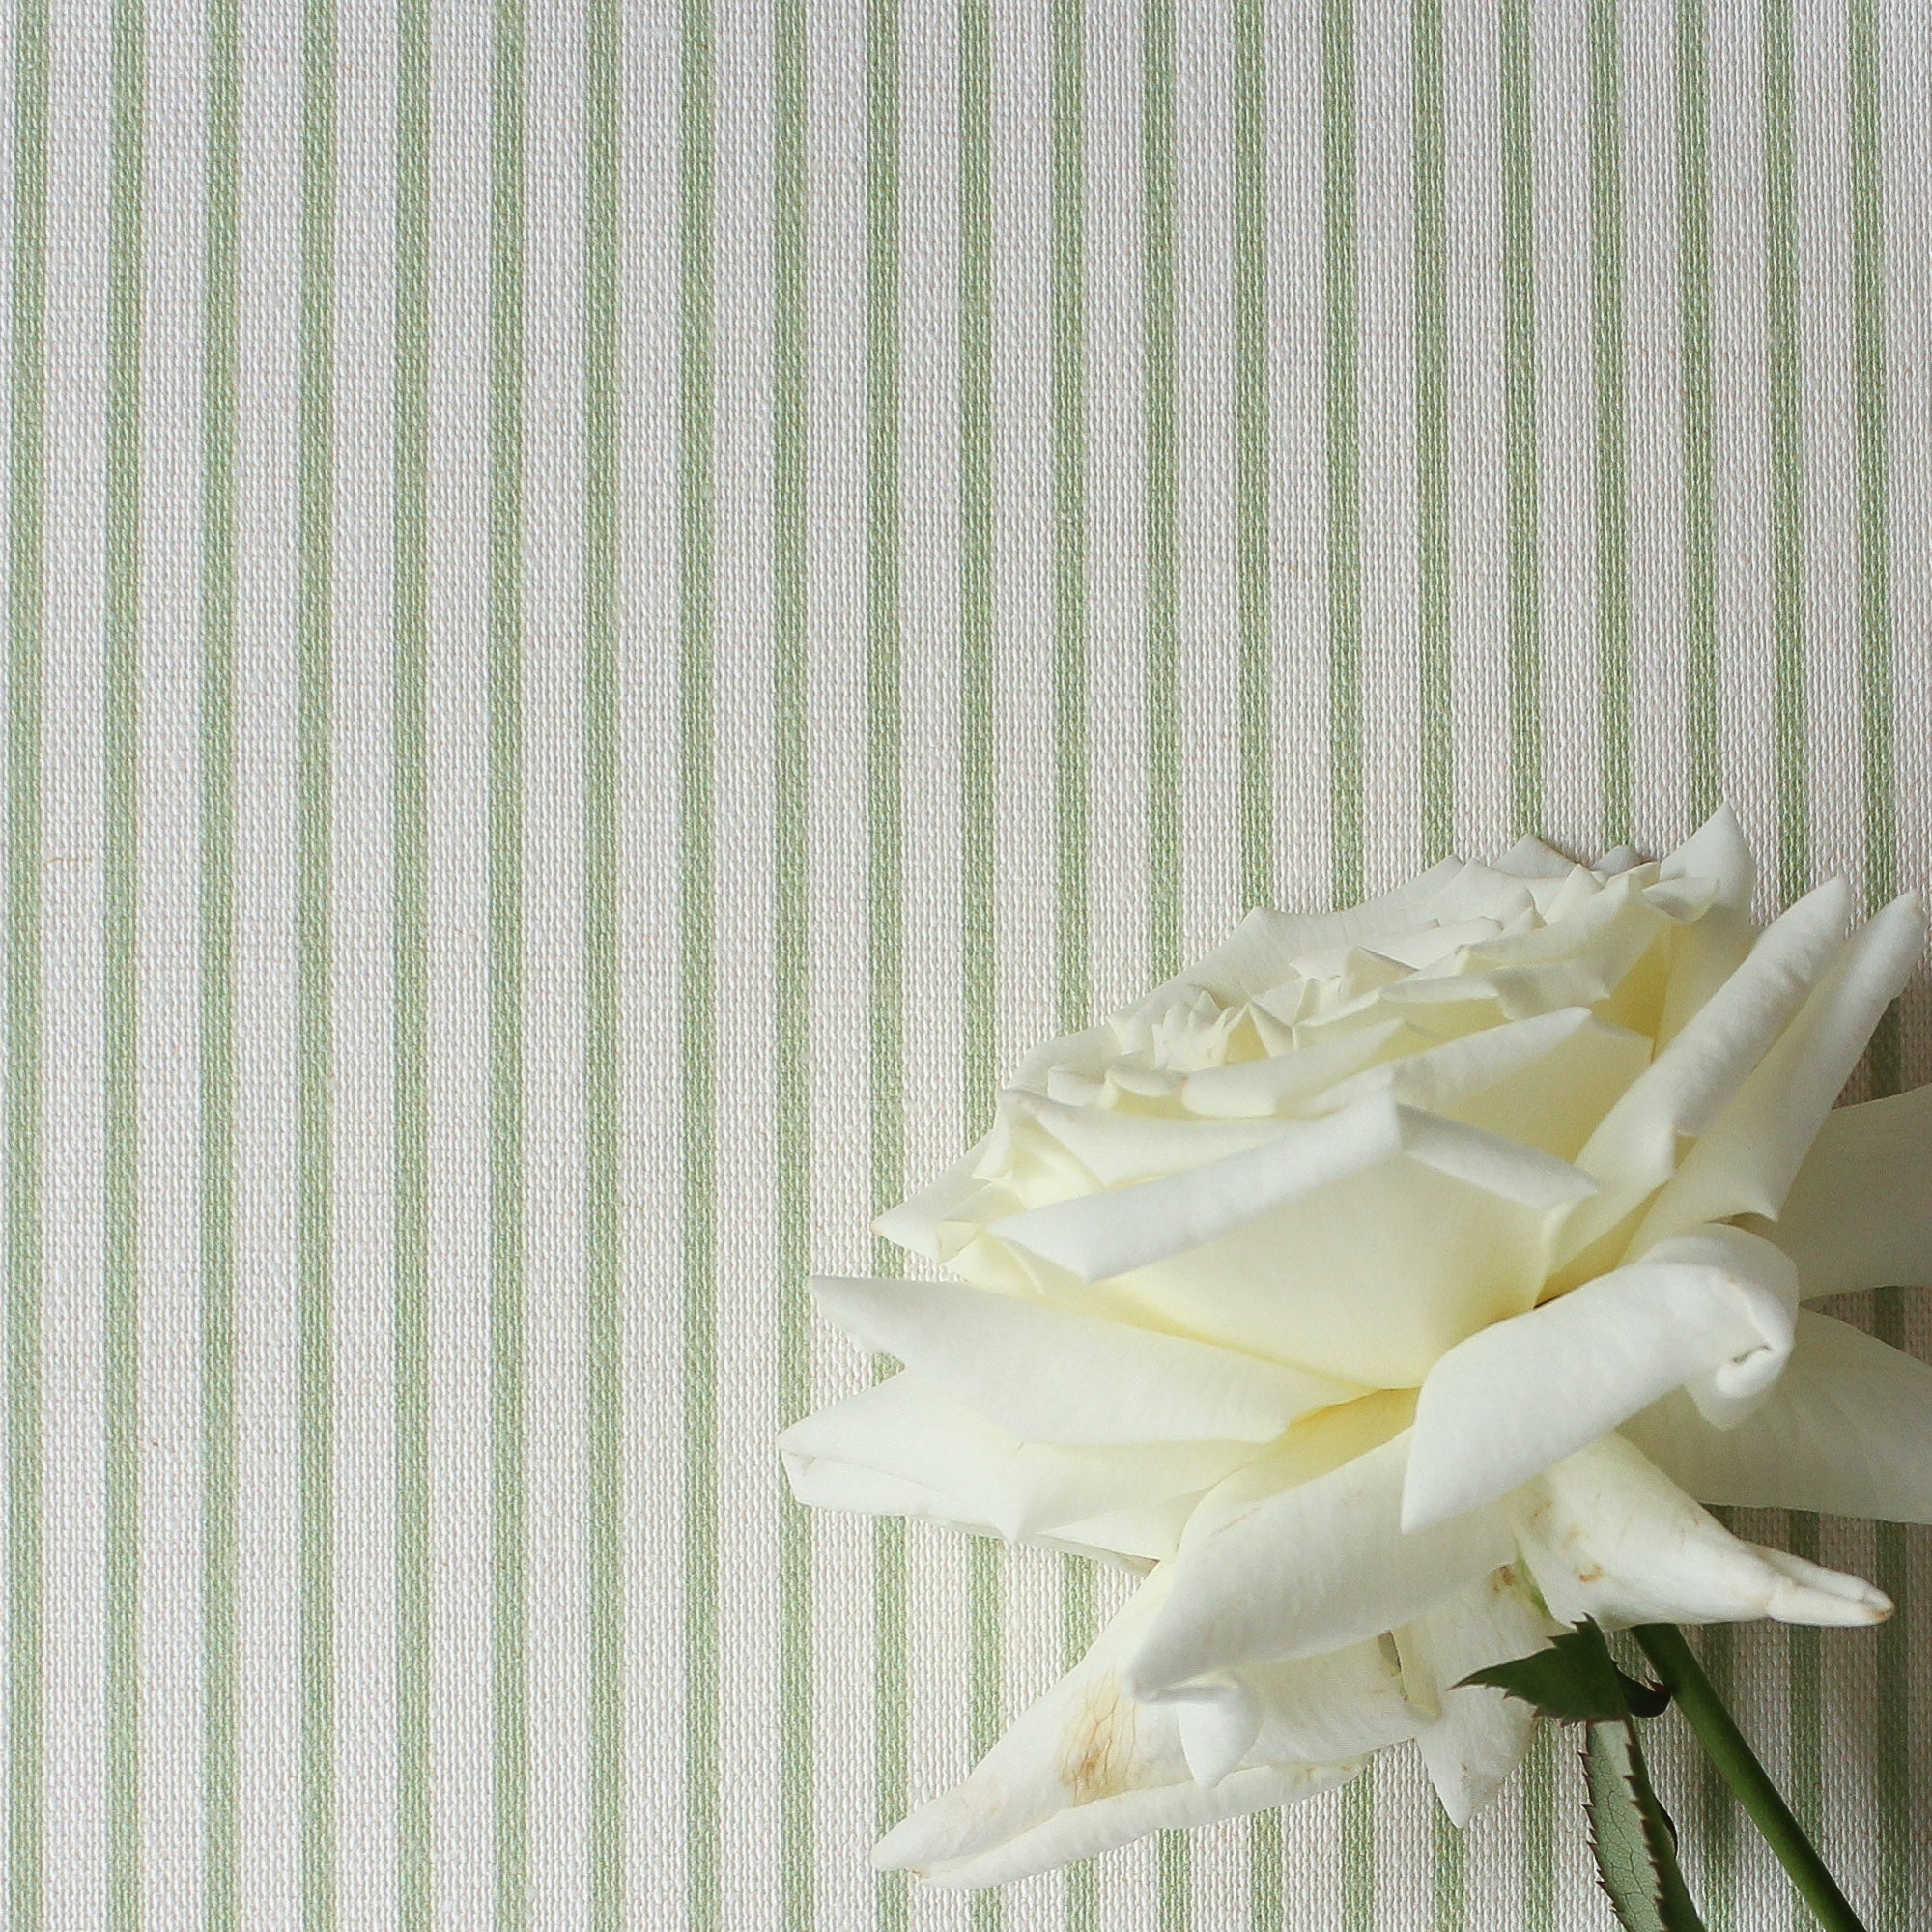 Petite Stripe Fabric - Elderflower - Hydrangea Lane Home